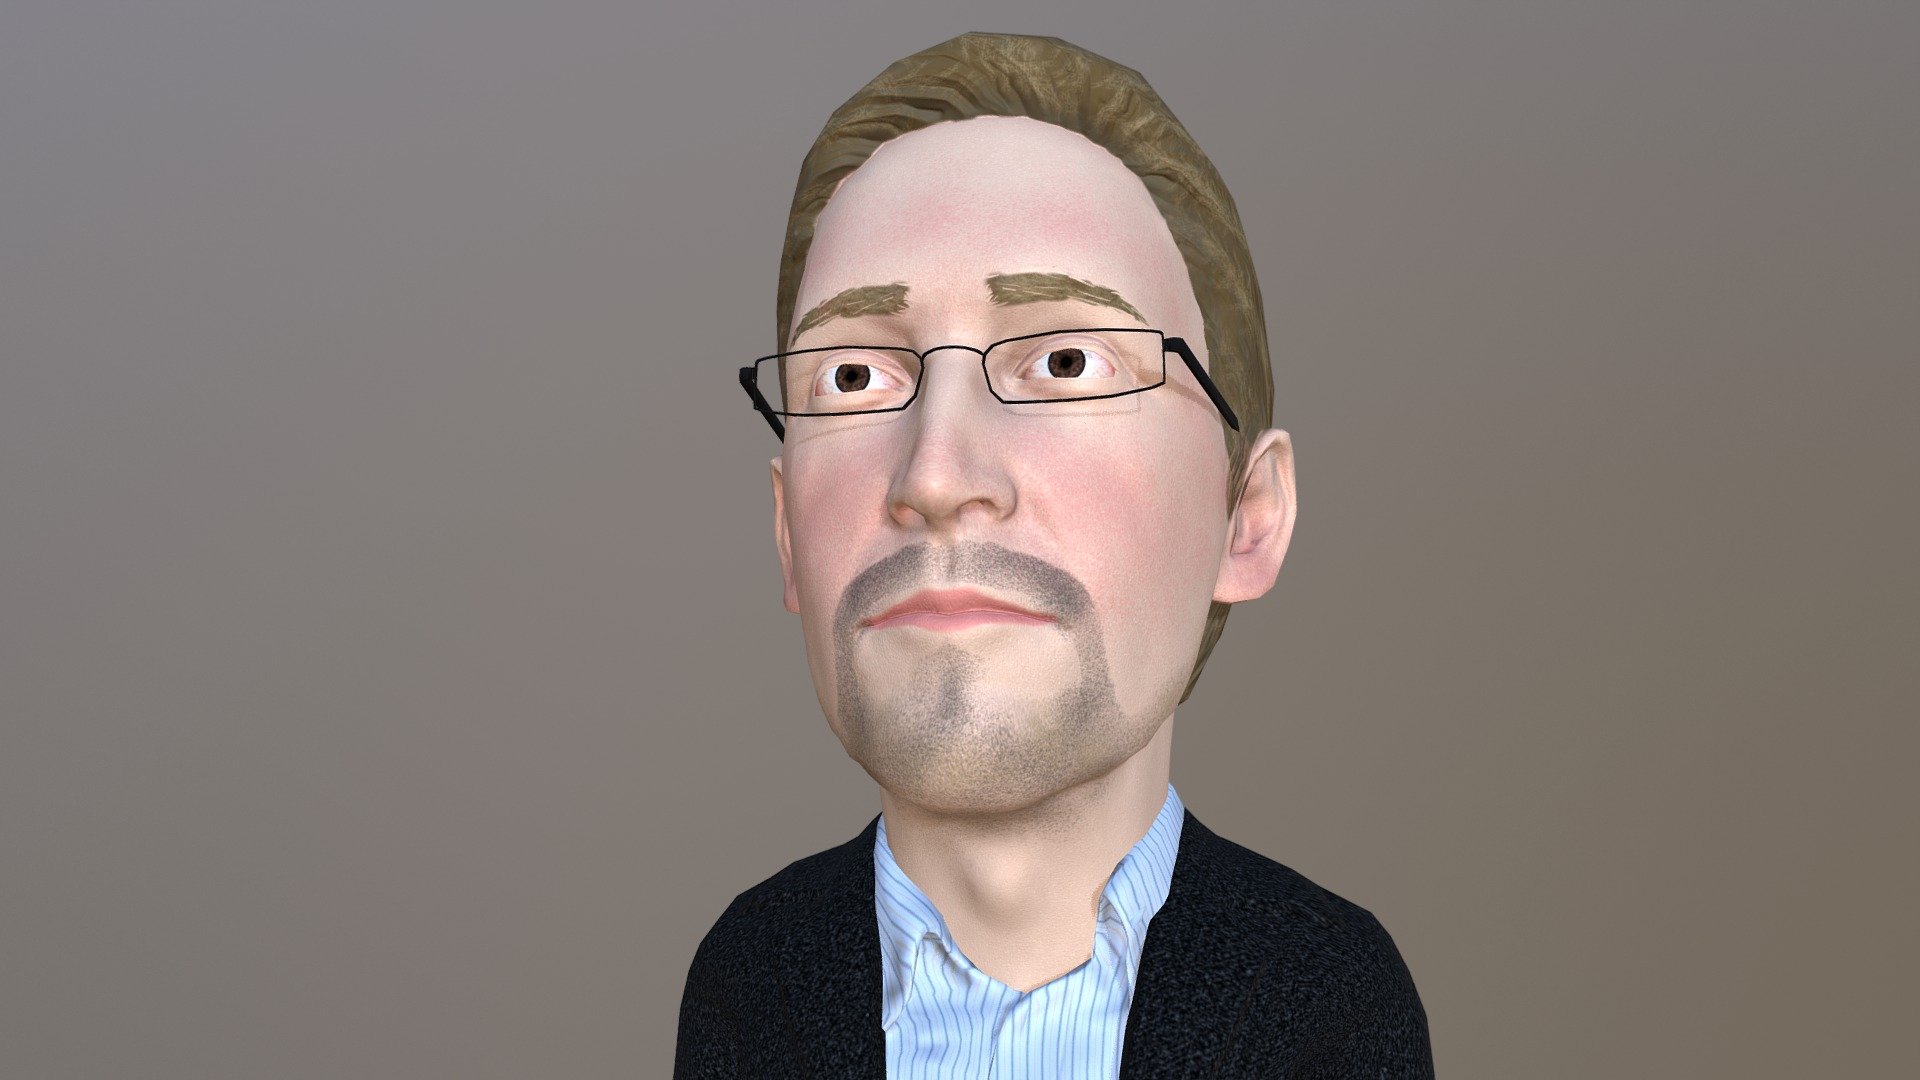 Edward Snowden 3D caricature